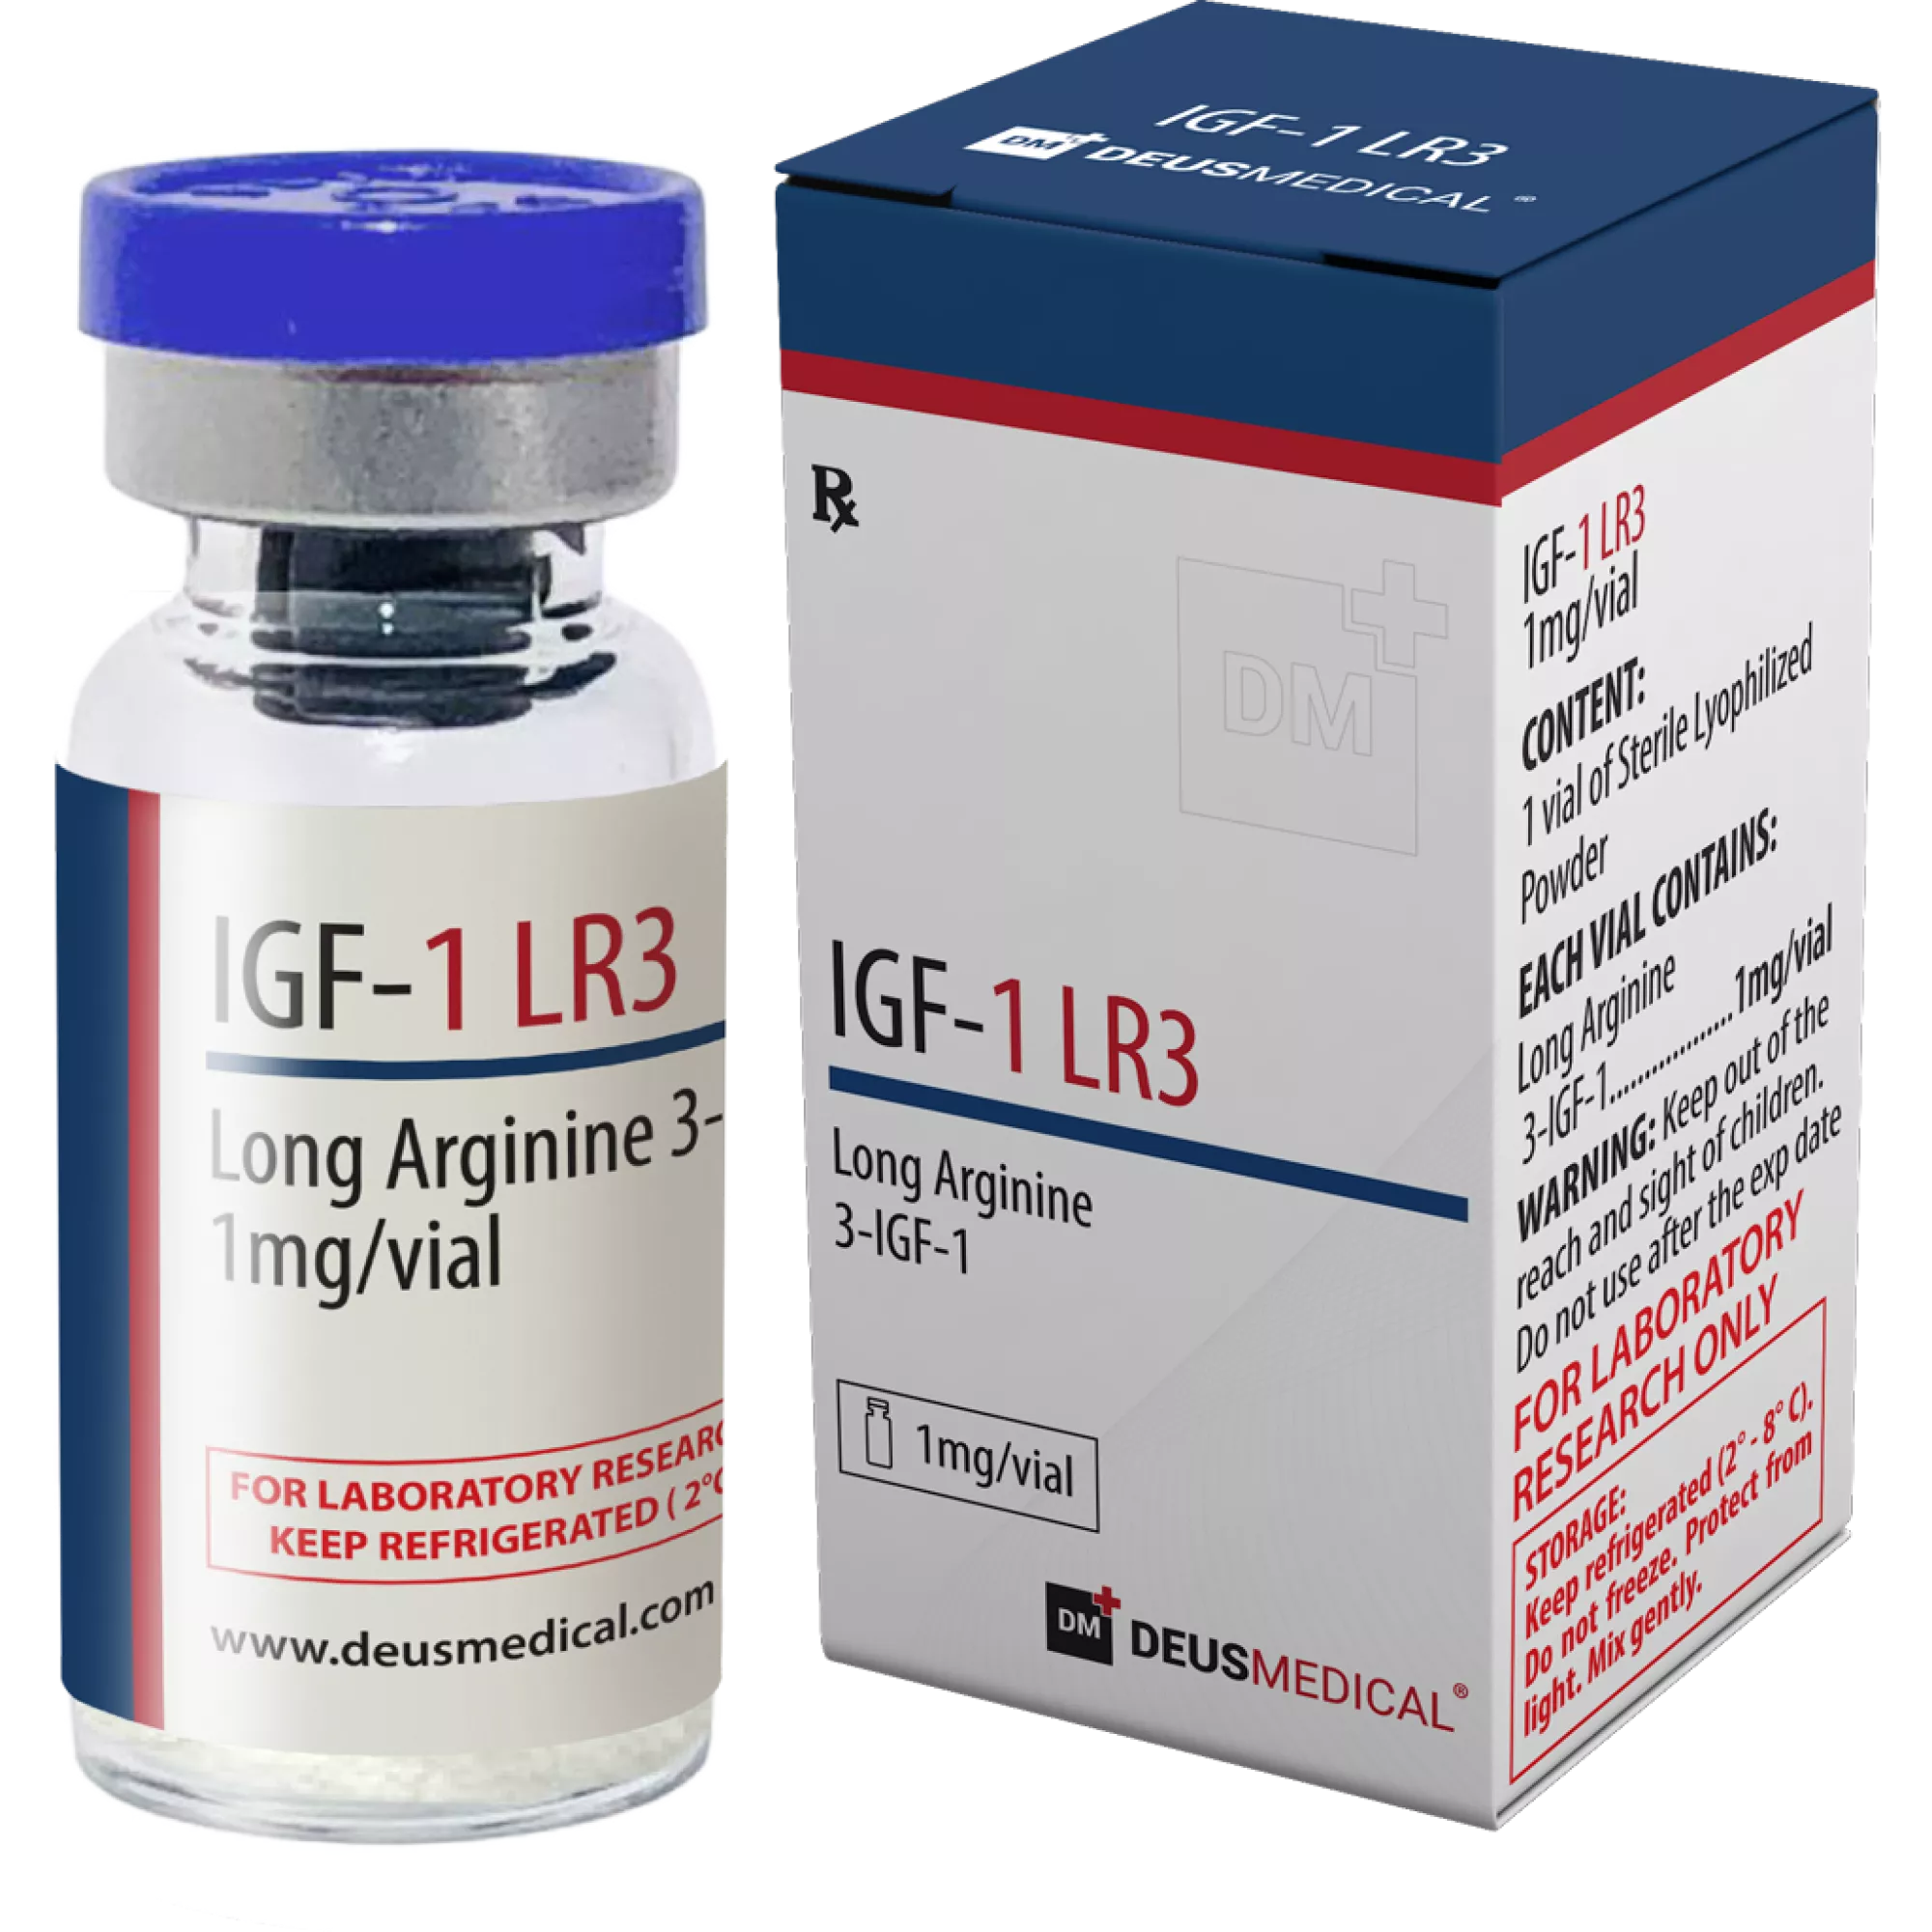 IGF-1 LR3 (Long Arginine 3-IGHF-1), Deus Medical, Buy Steroids Online - www.deuspower.shop